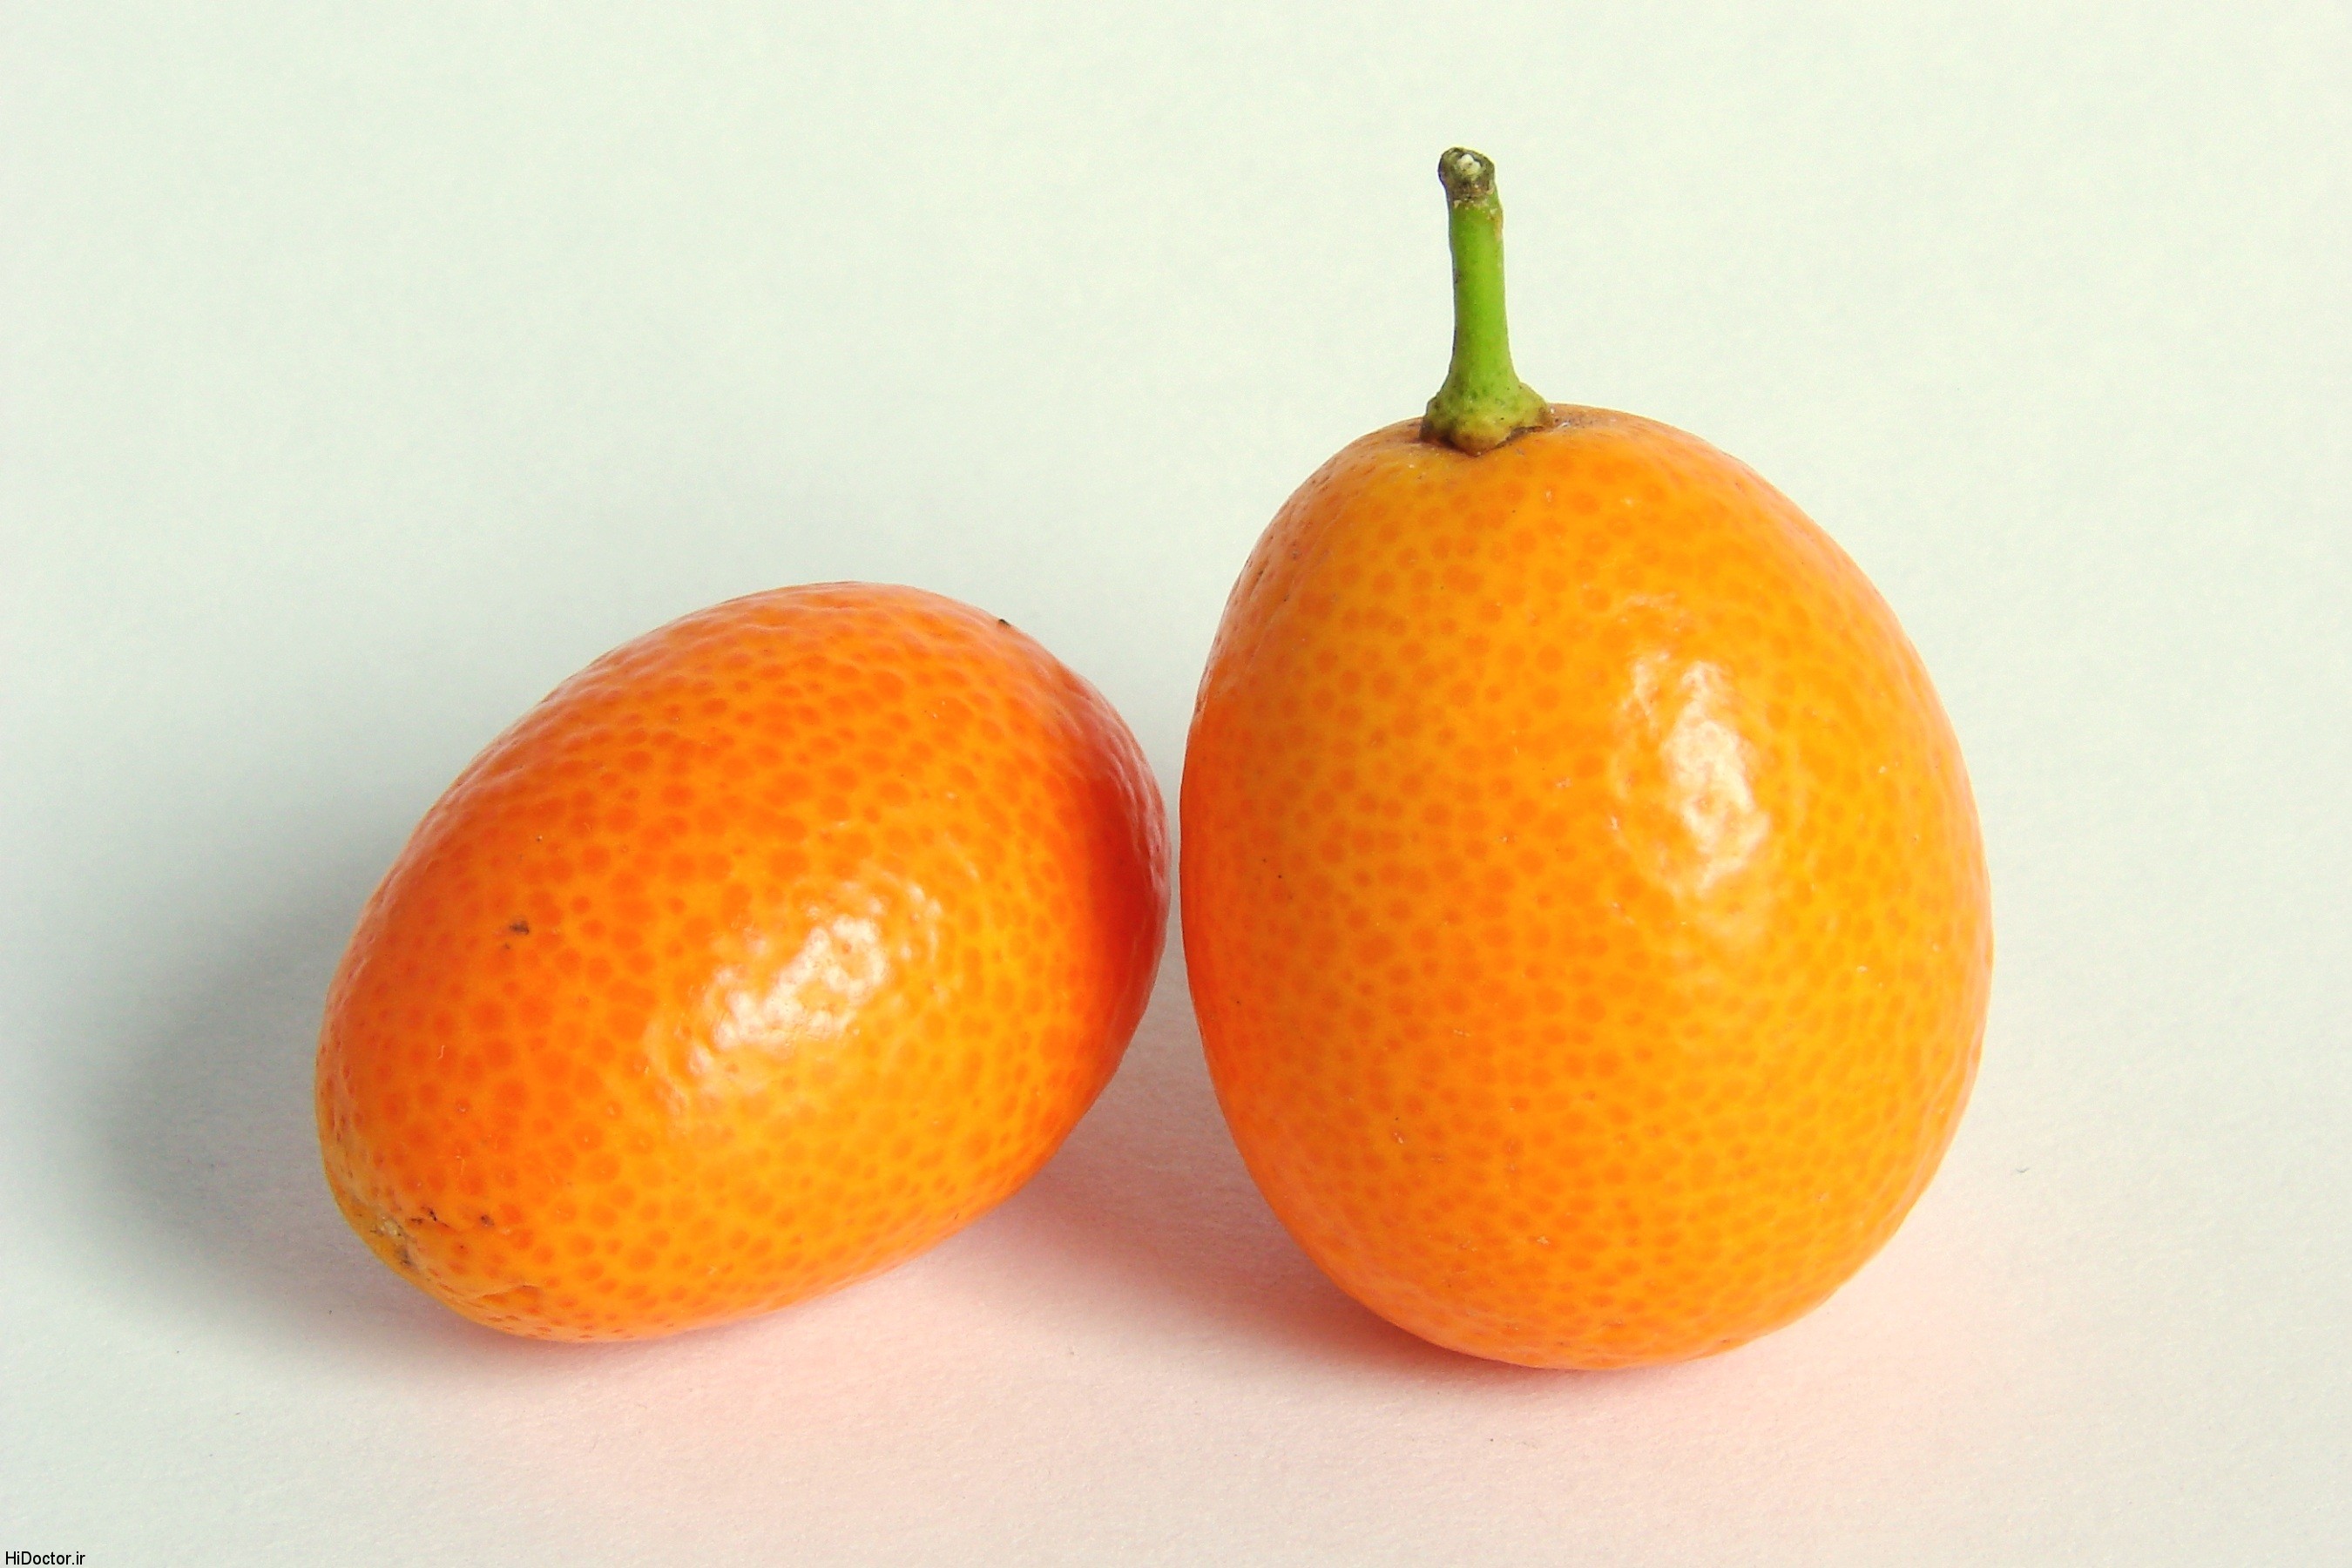 Kumquat 0245 چه میزان درباره این میوه اطلاع دارید